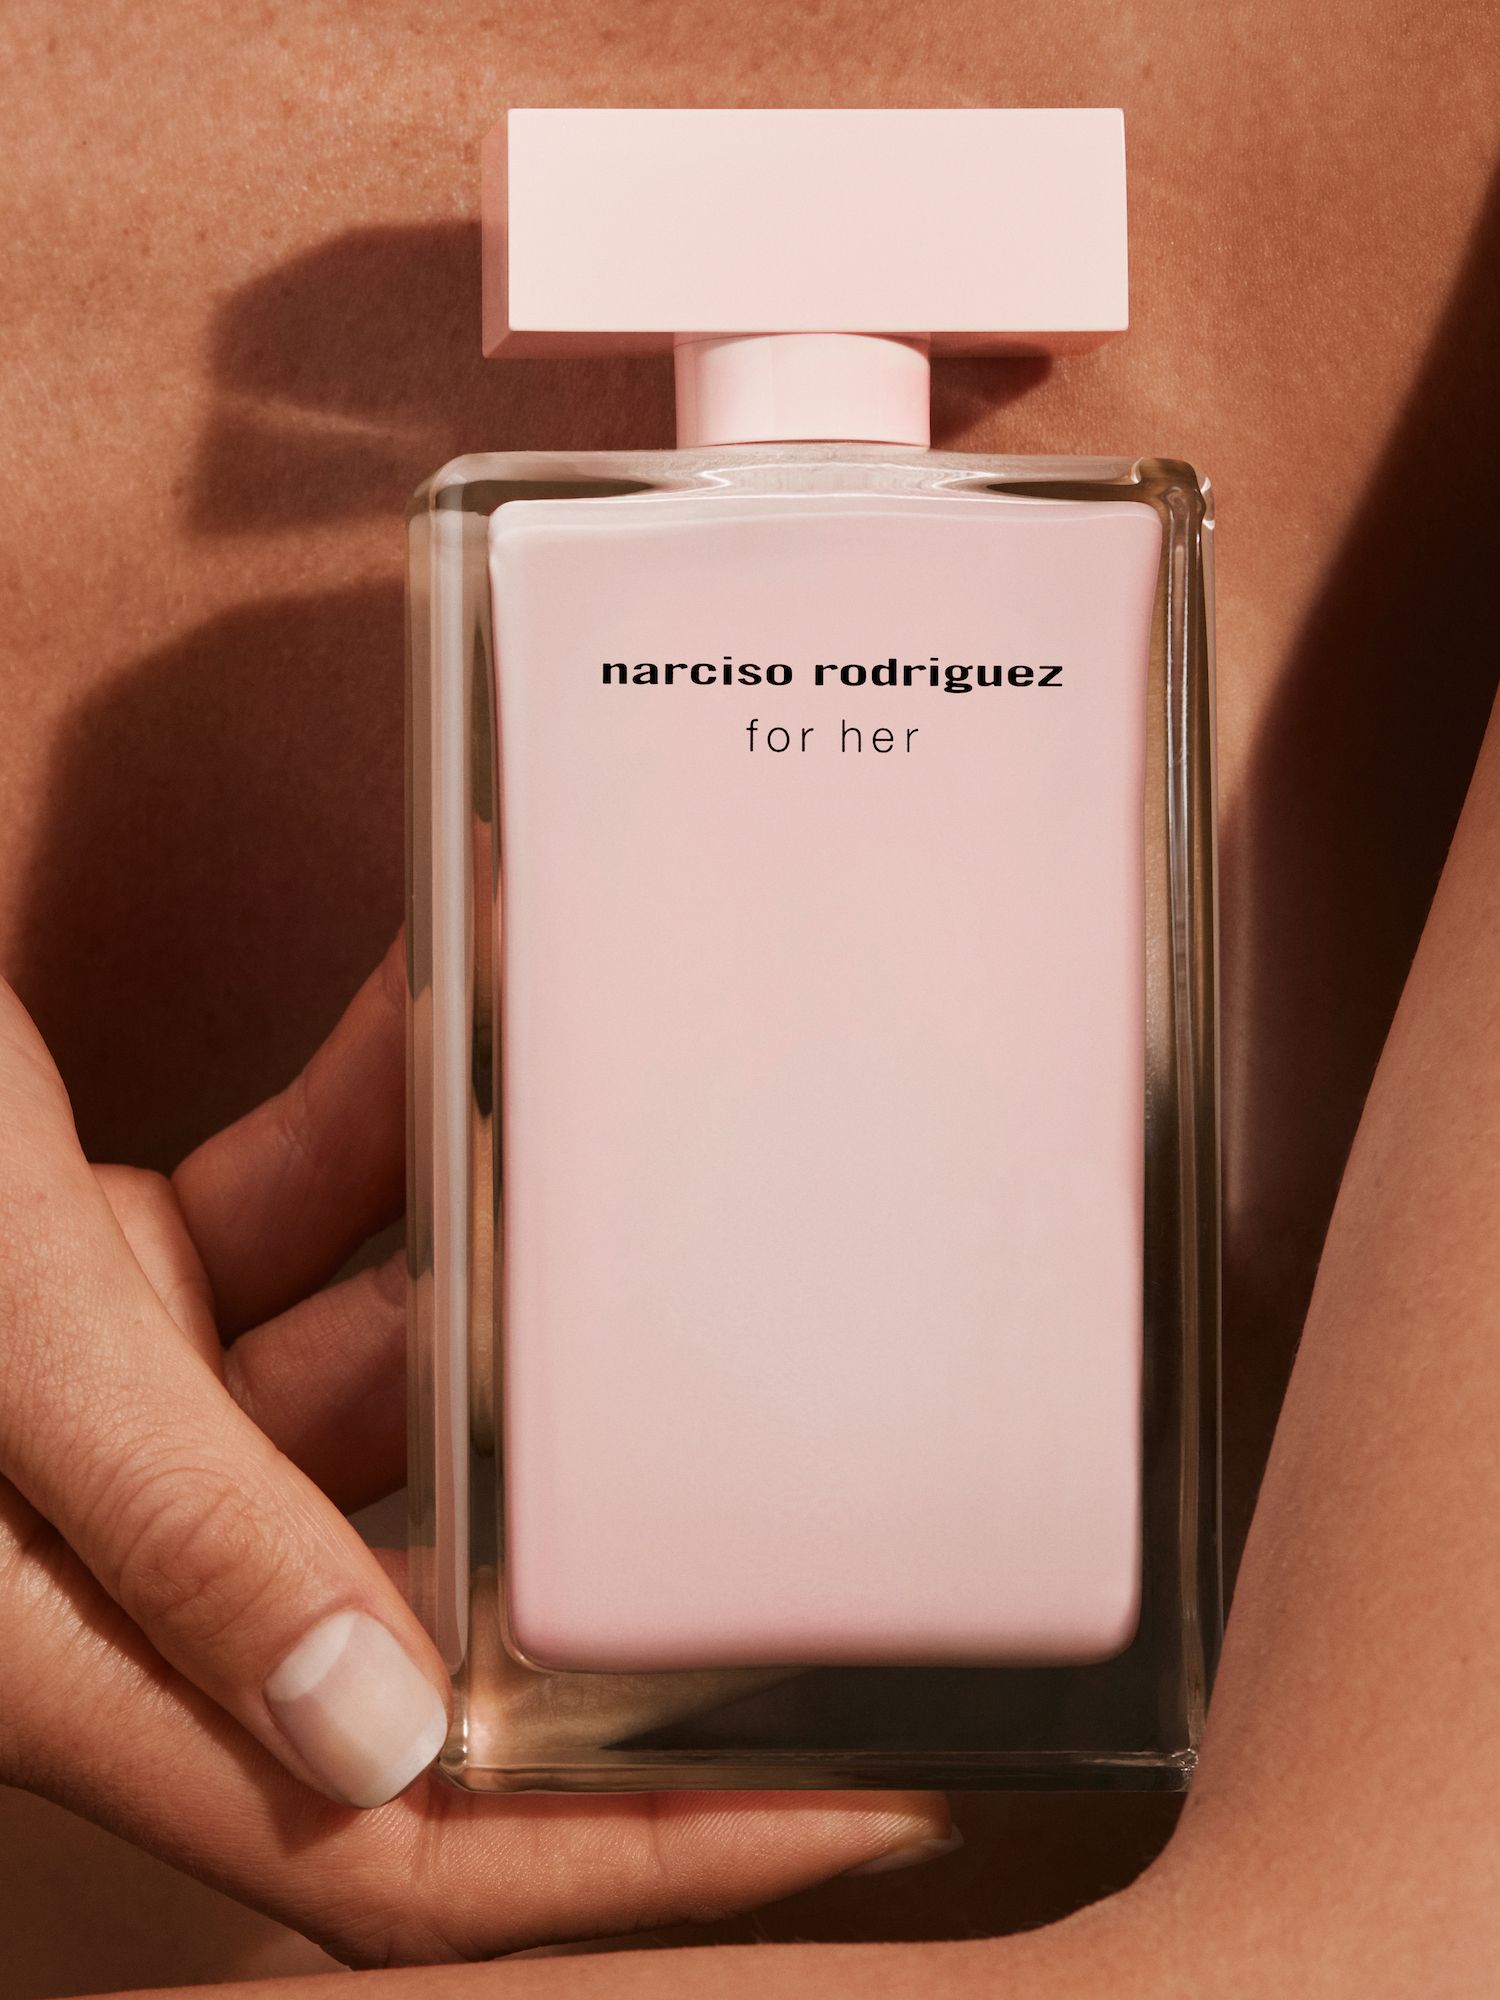 30ml Parfum, Partners de at Eau Narciso Her Lewis Rodriguez John for &